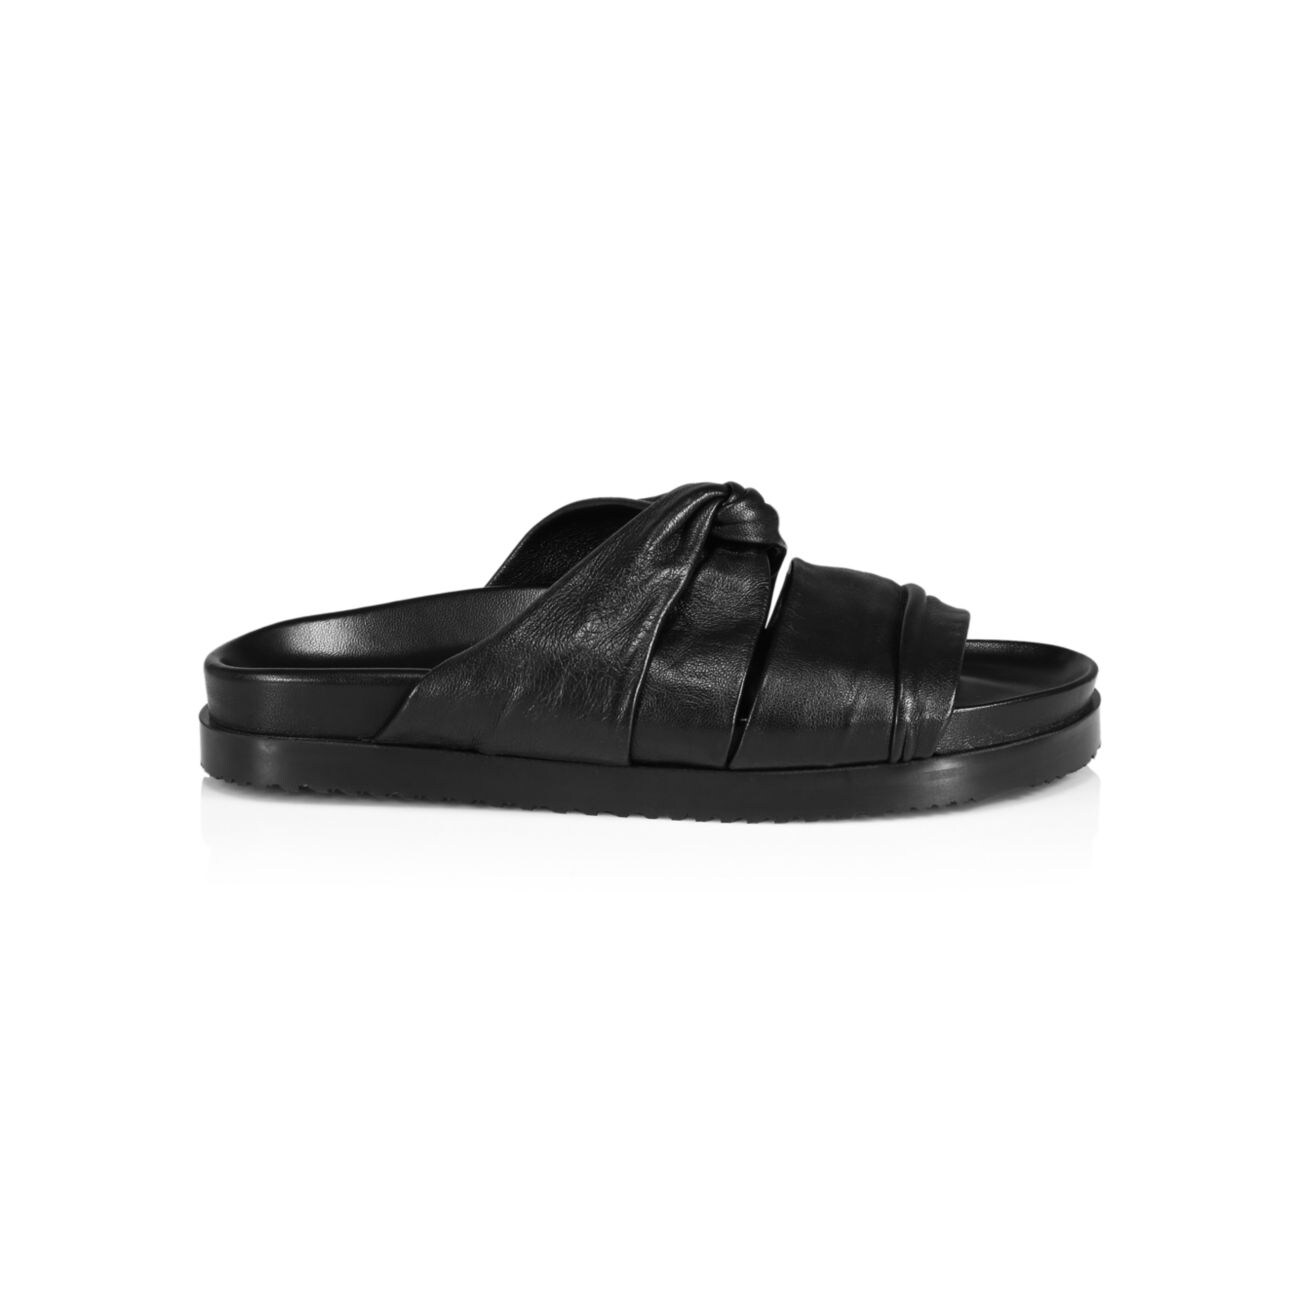 Twisted Leather Pool Slide Sandals 3.1 PHILLIP LIM